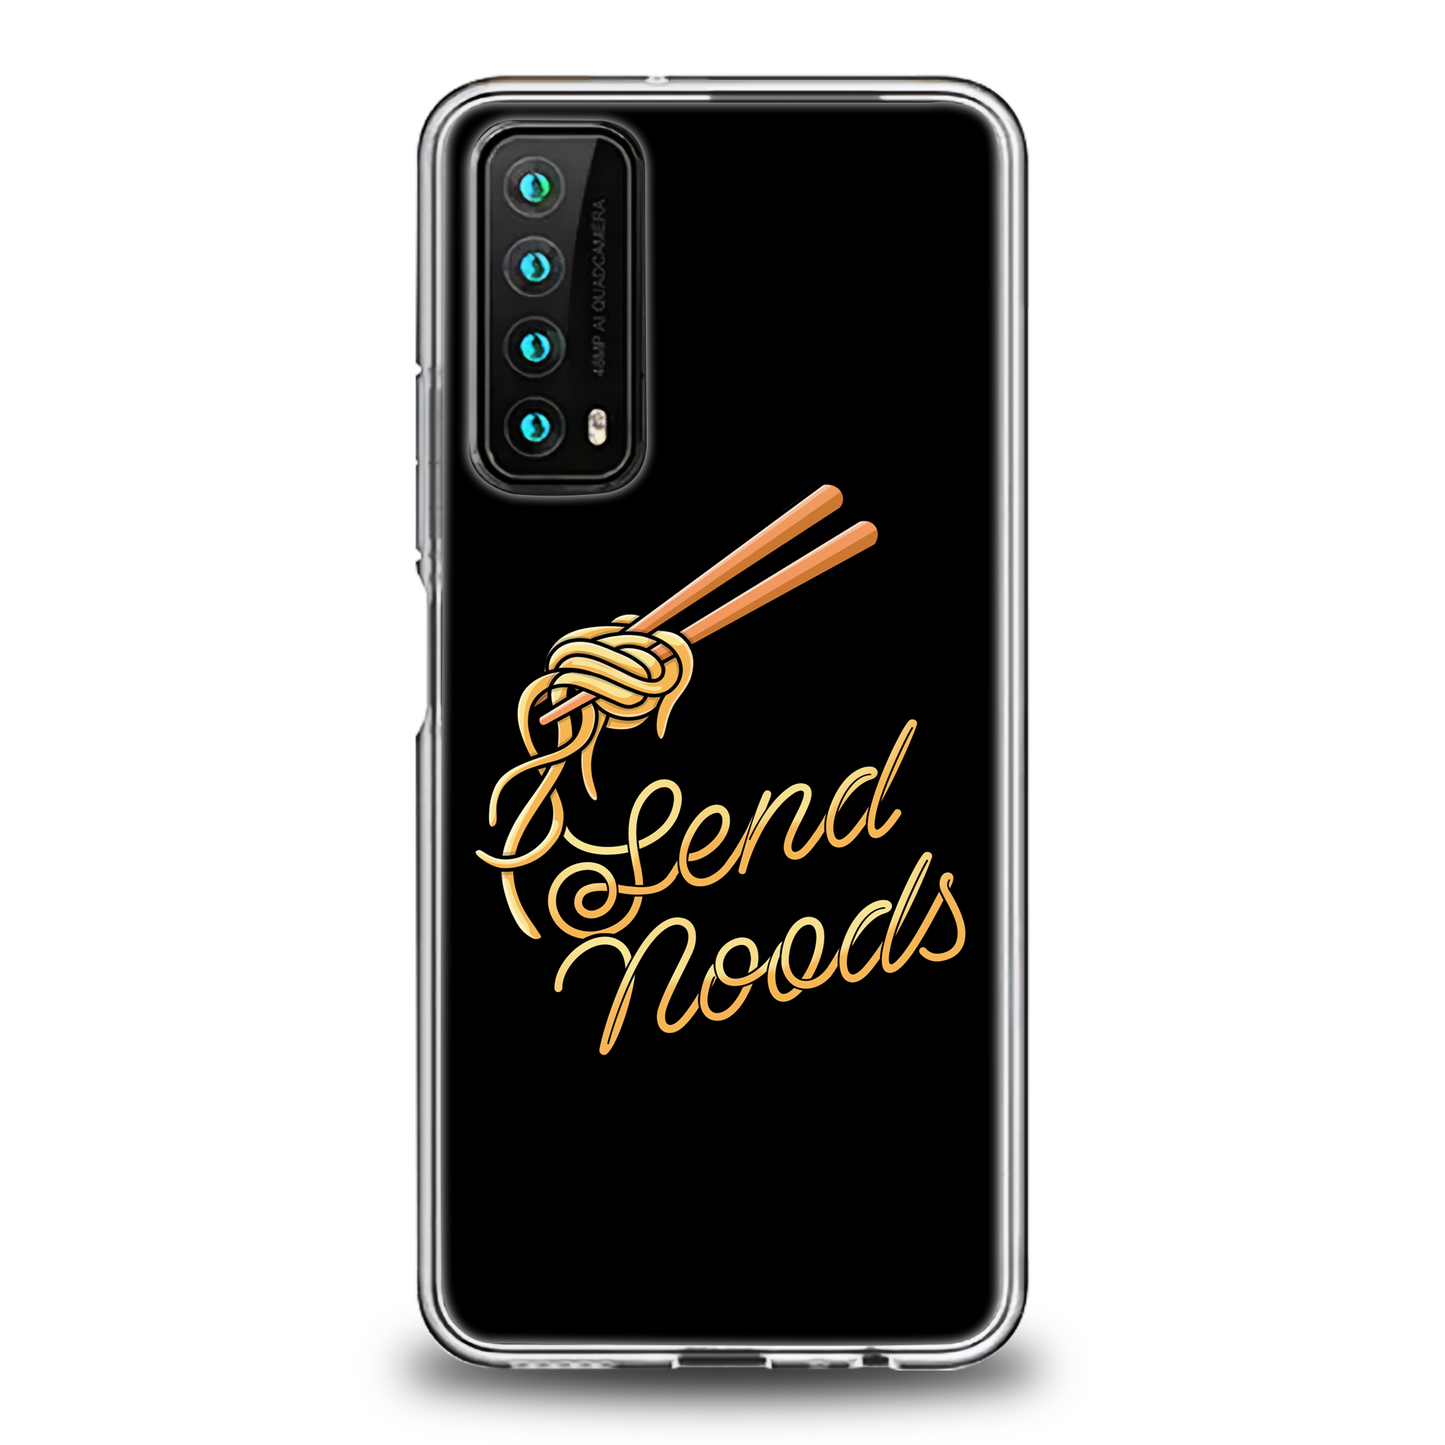 Send Noods Phone Case - Huawei